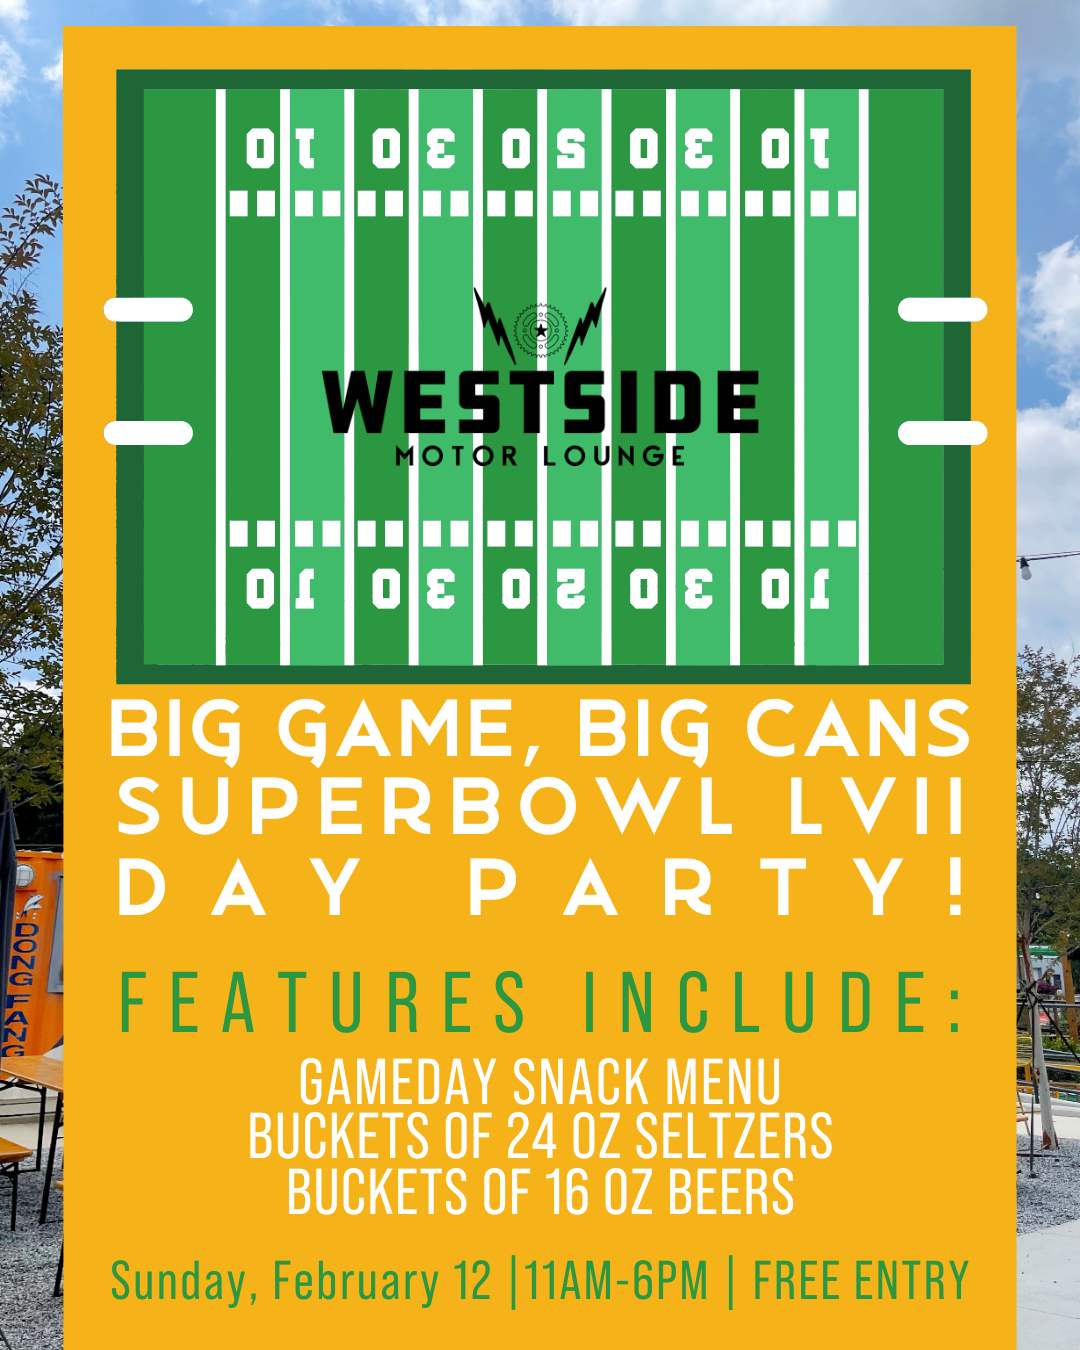 Big Game Big Cans Super Bowl Day Party at Westside Motor Lounge 2-12-23